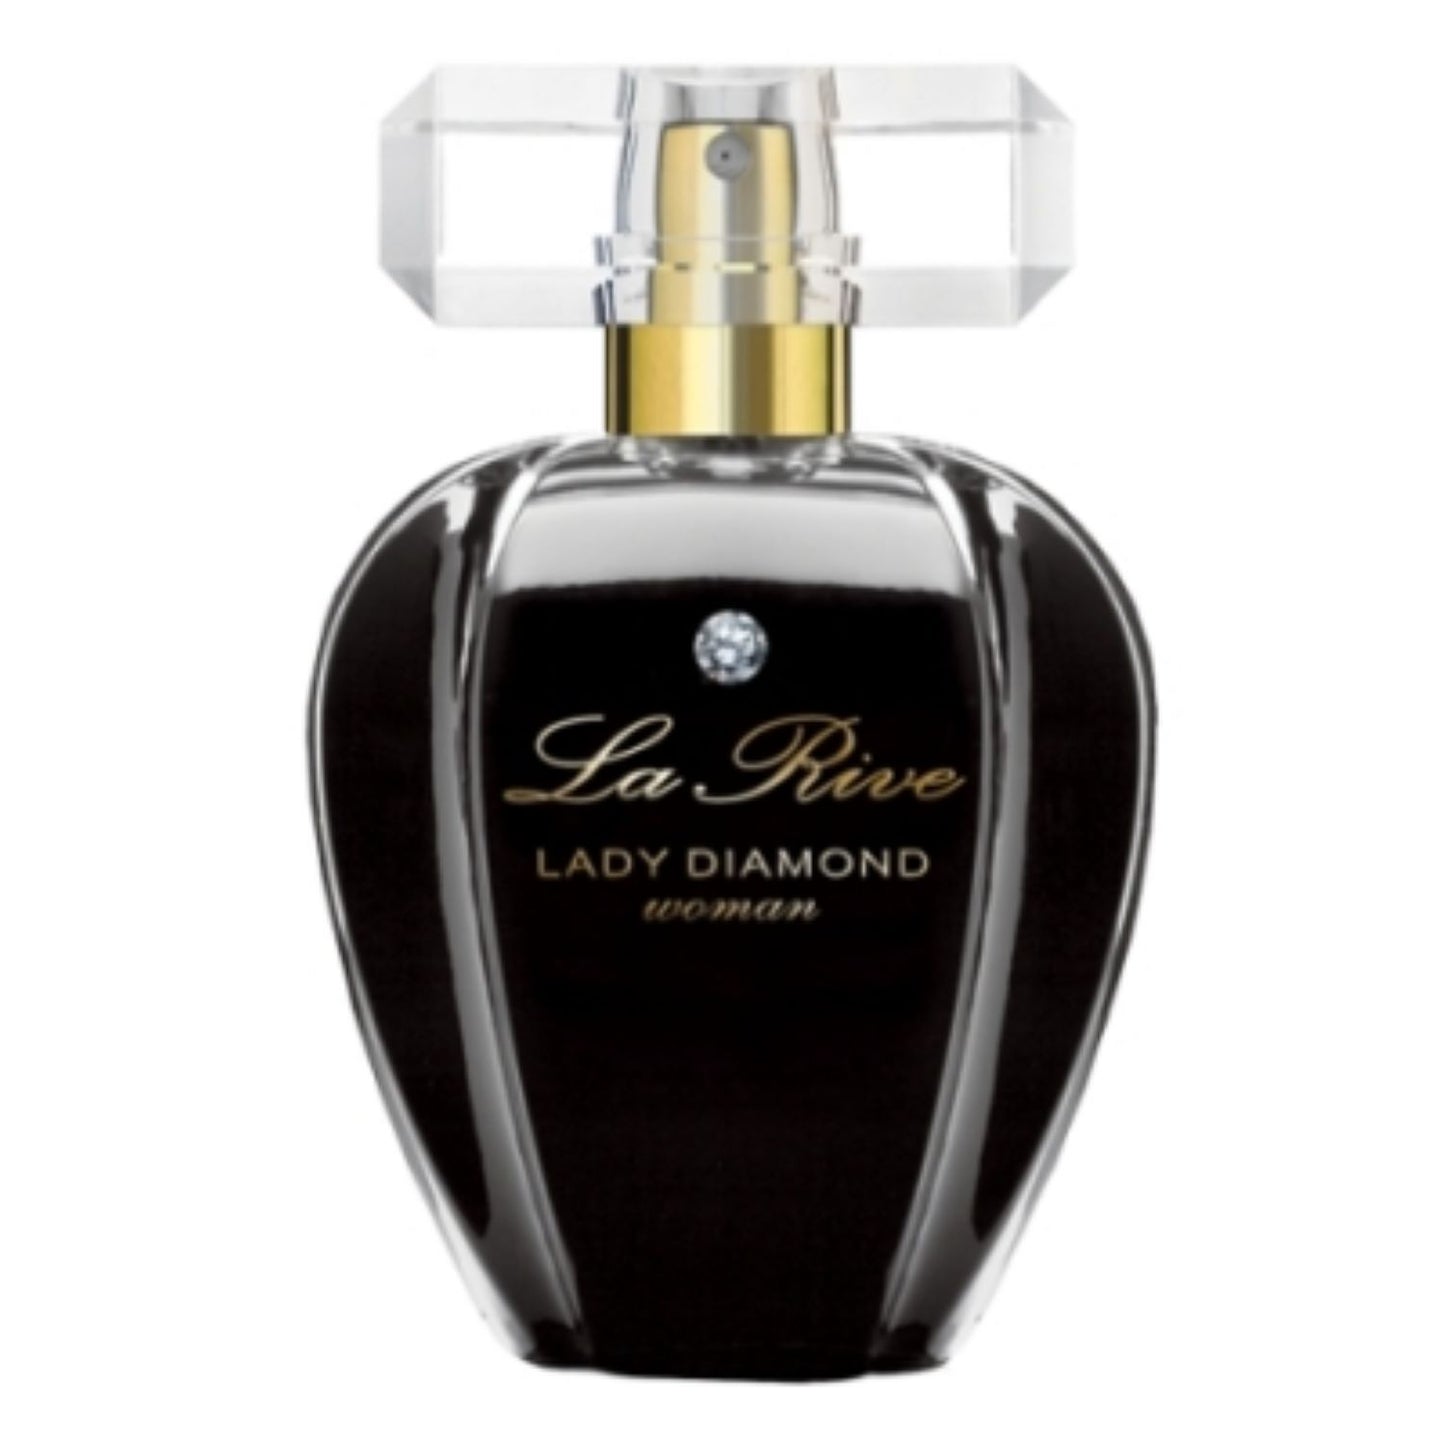 LA RIVE LADY DIAMOND EAU DE PARFUM 75ML (with Swarovski crystal) - floral fruity